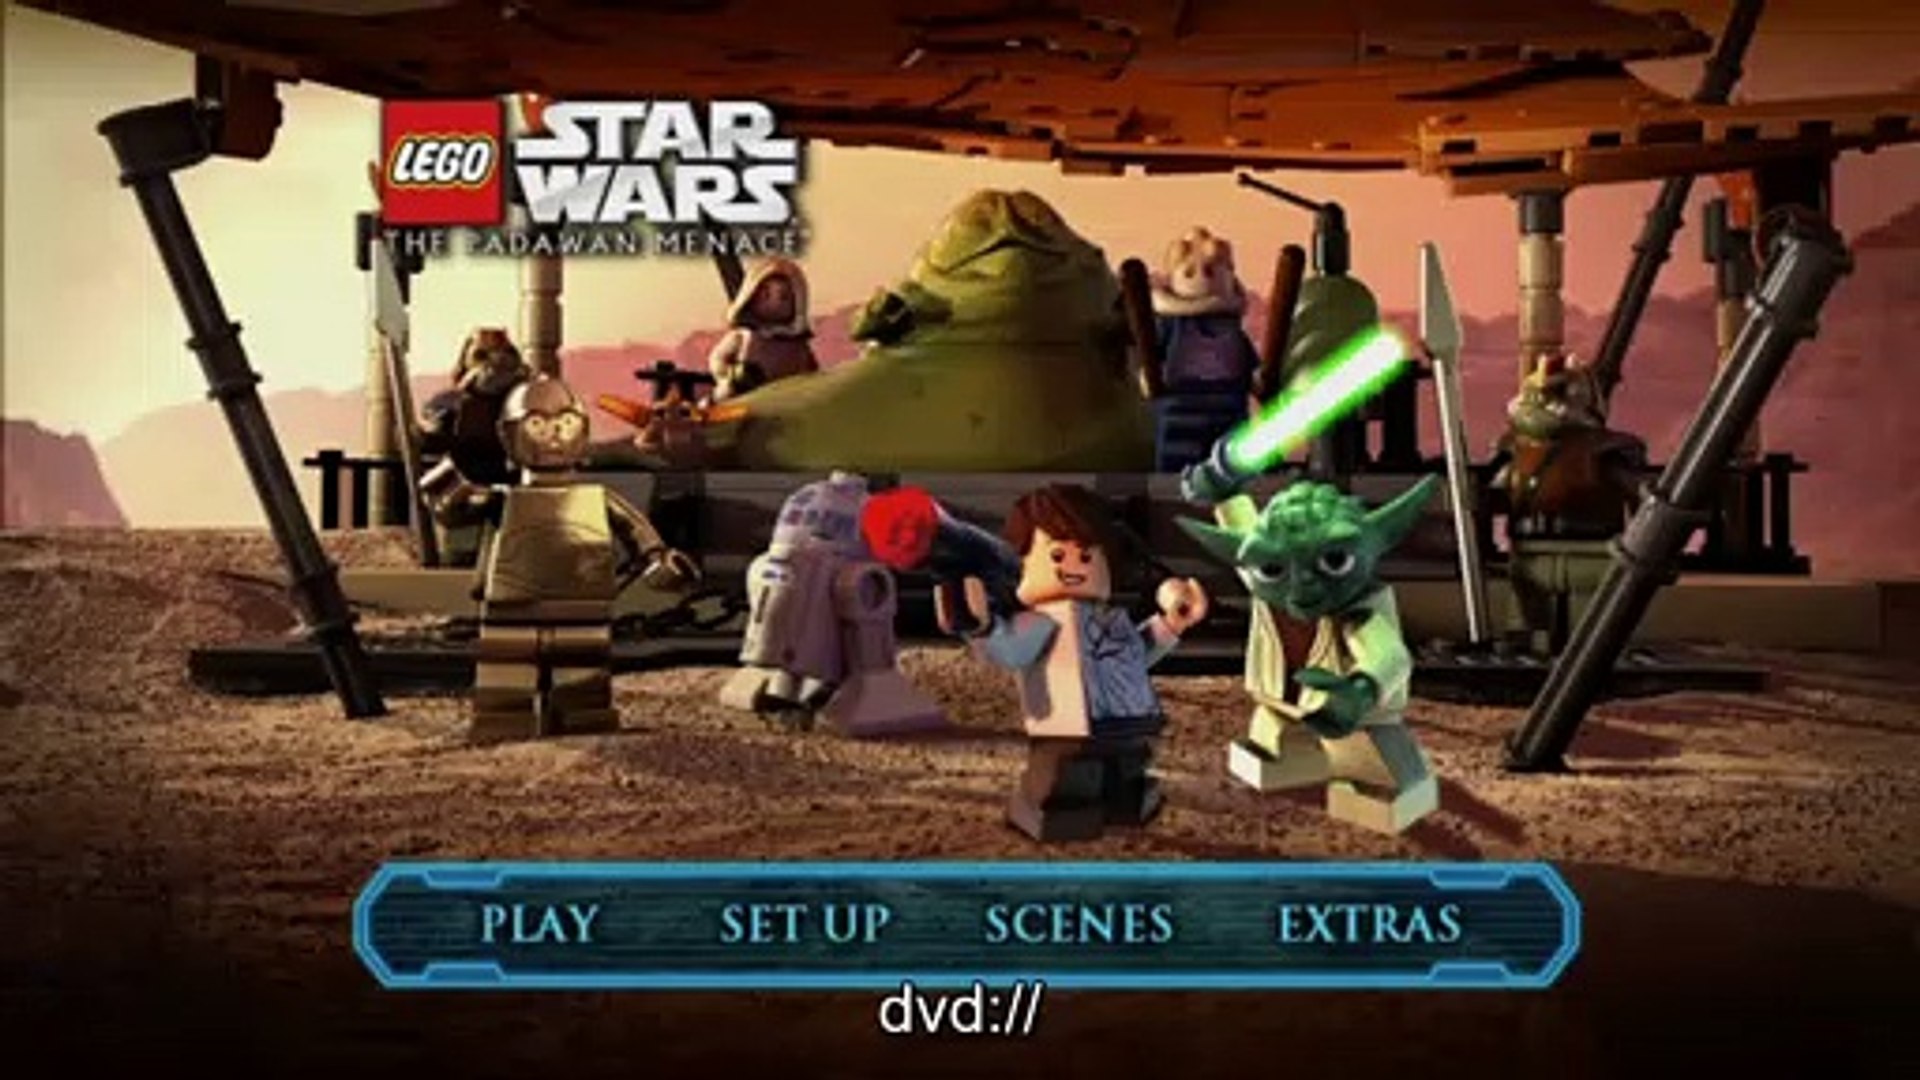 Opening to Lego Wars: The Padawan 2011 DVD (HD) - video Dailymotion